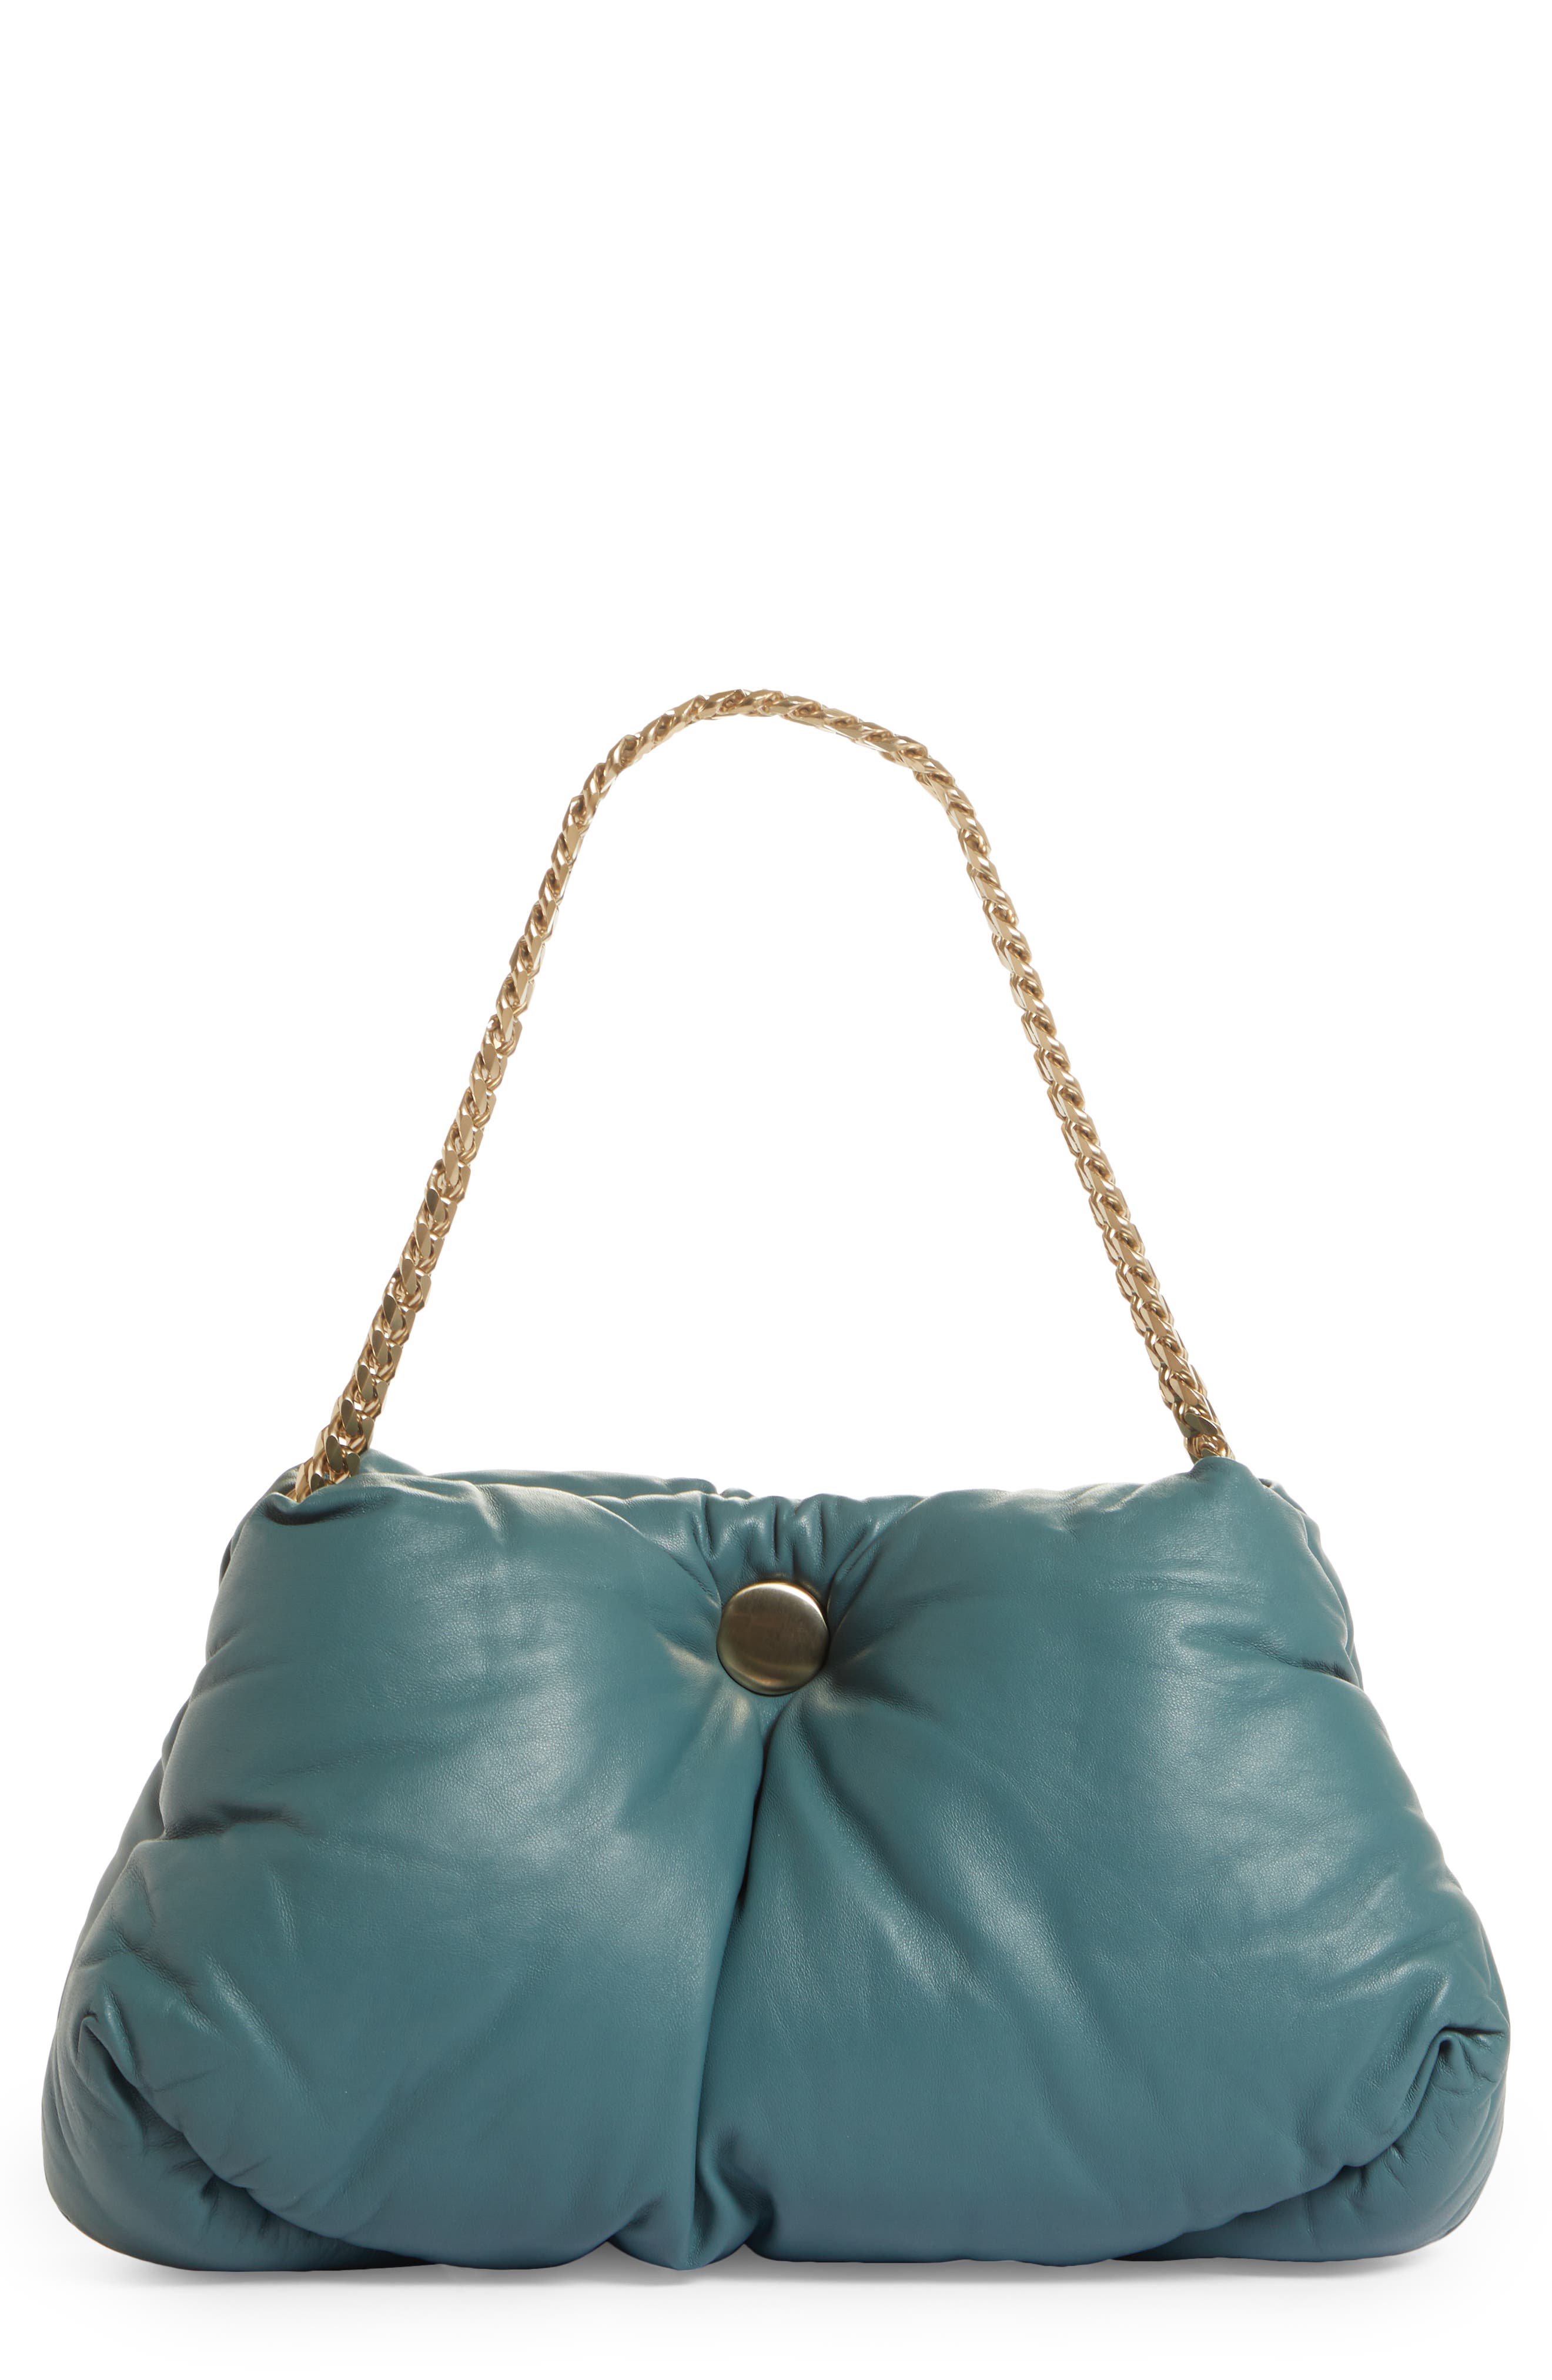 Proenza Schouler Puffy Tobo Leather Shoulder Bag - Coral